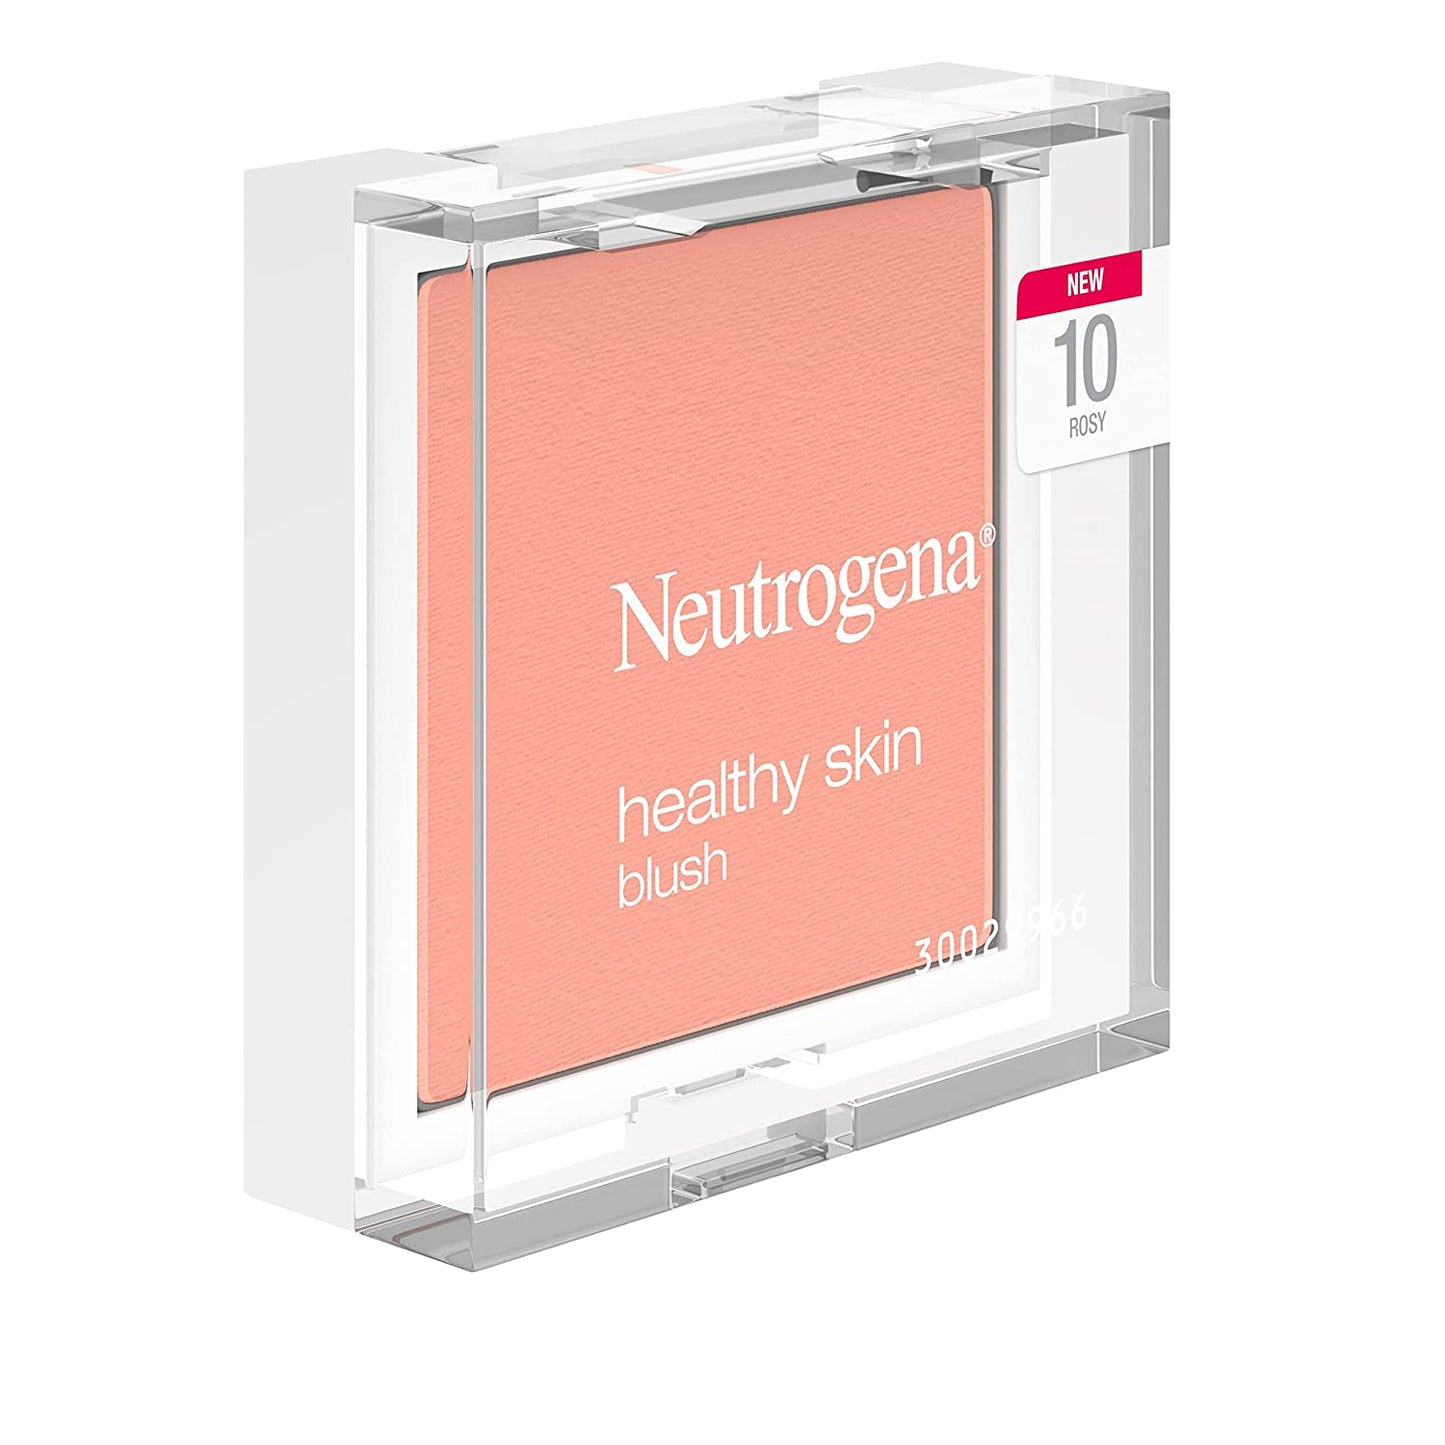 Neutrogena Healthy Skin Blush Make Up Pallete  0.19oz / 5.26 g